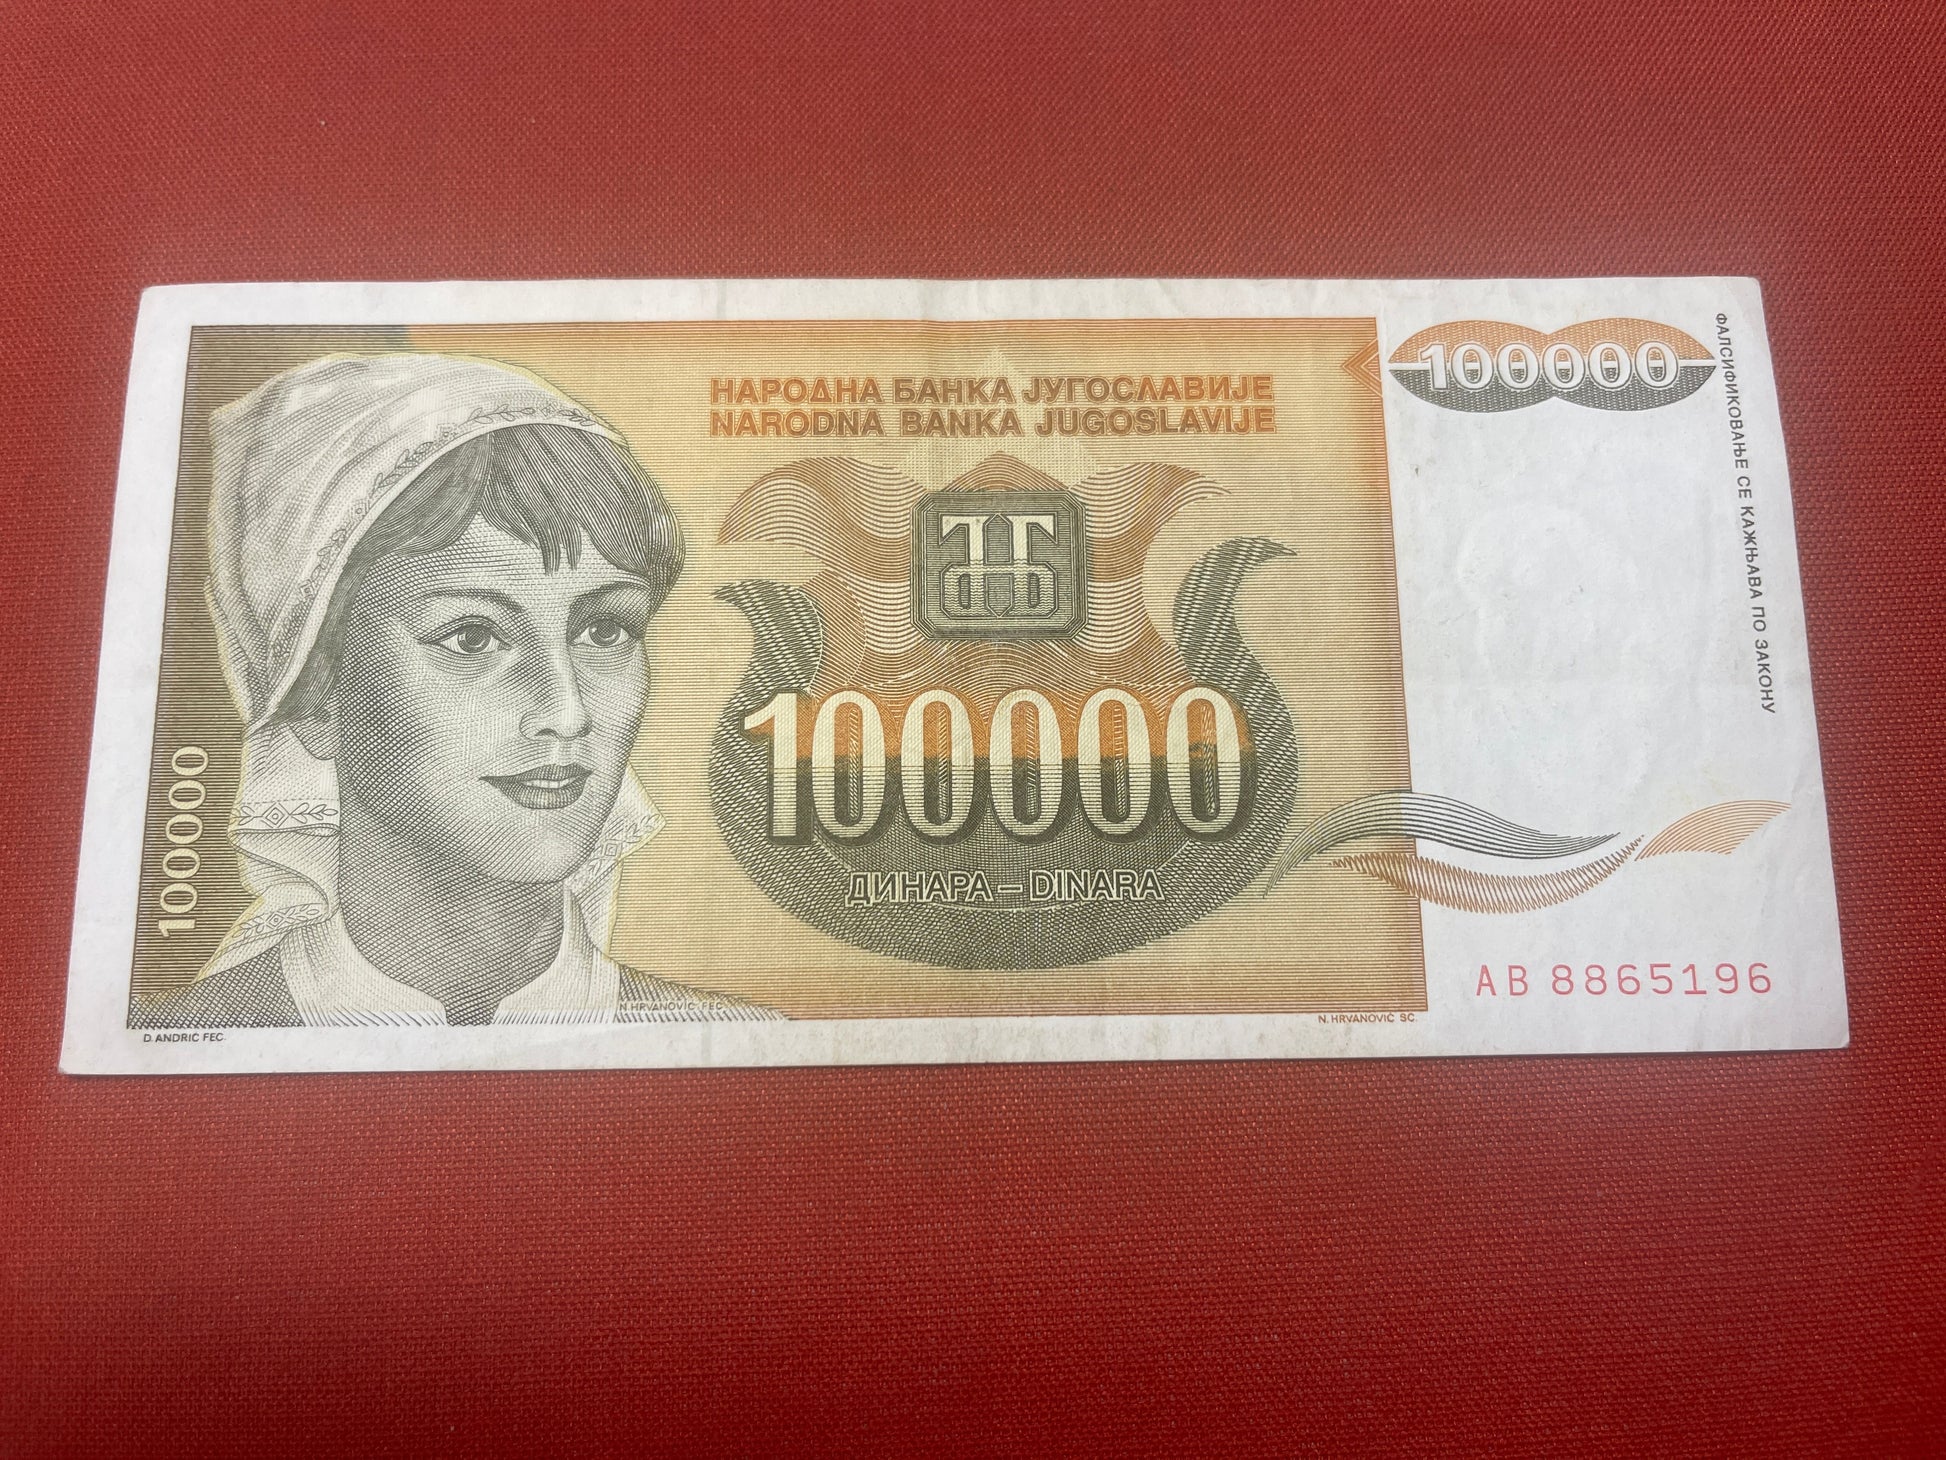 Socialist Republic of Yugoslavia 1963 - 1992 100000 Dinara 100000 Yun Serial AB8865196